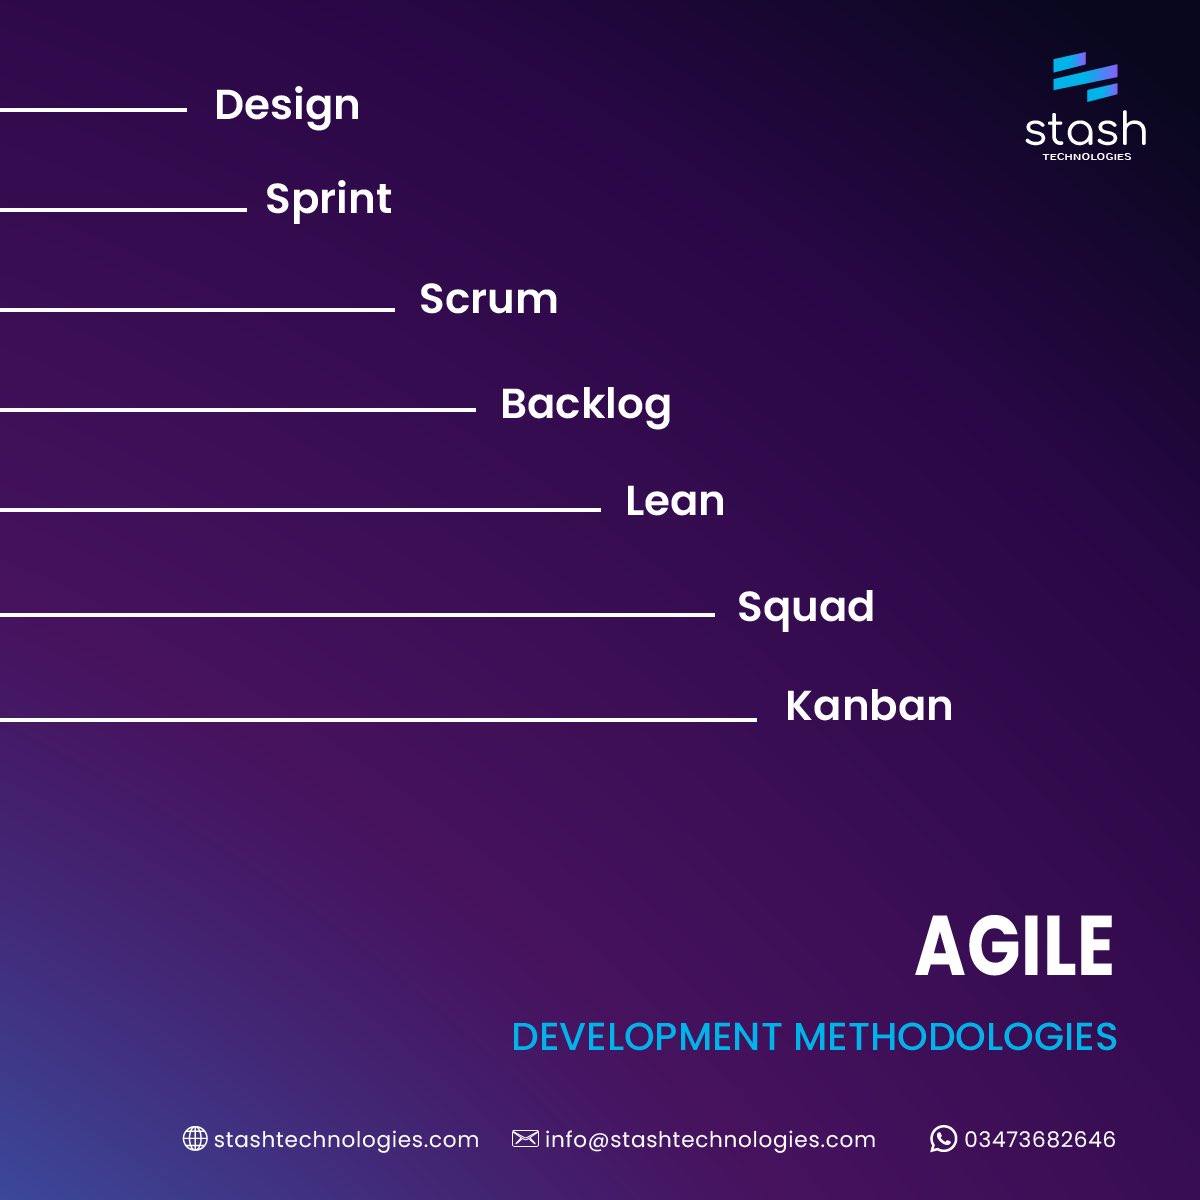 Agile Development Methodologies!

Know More about us:
stashtechnologies.com

#itconsultancy stashtechnologies #softwarehouse #techhouse #techcompany #technology #techtrends #itconsultancy #ecommerce #explore #futureinnovation #business #pakistan #islamabad